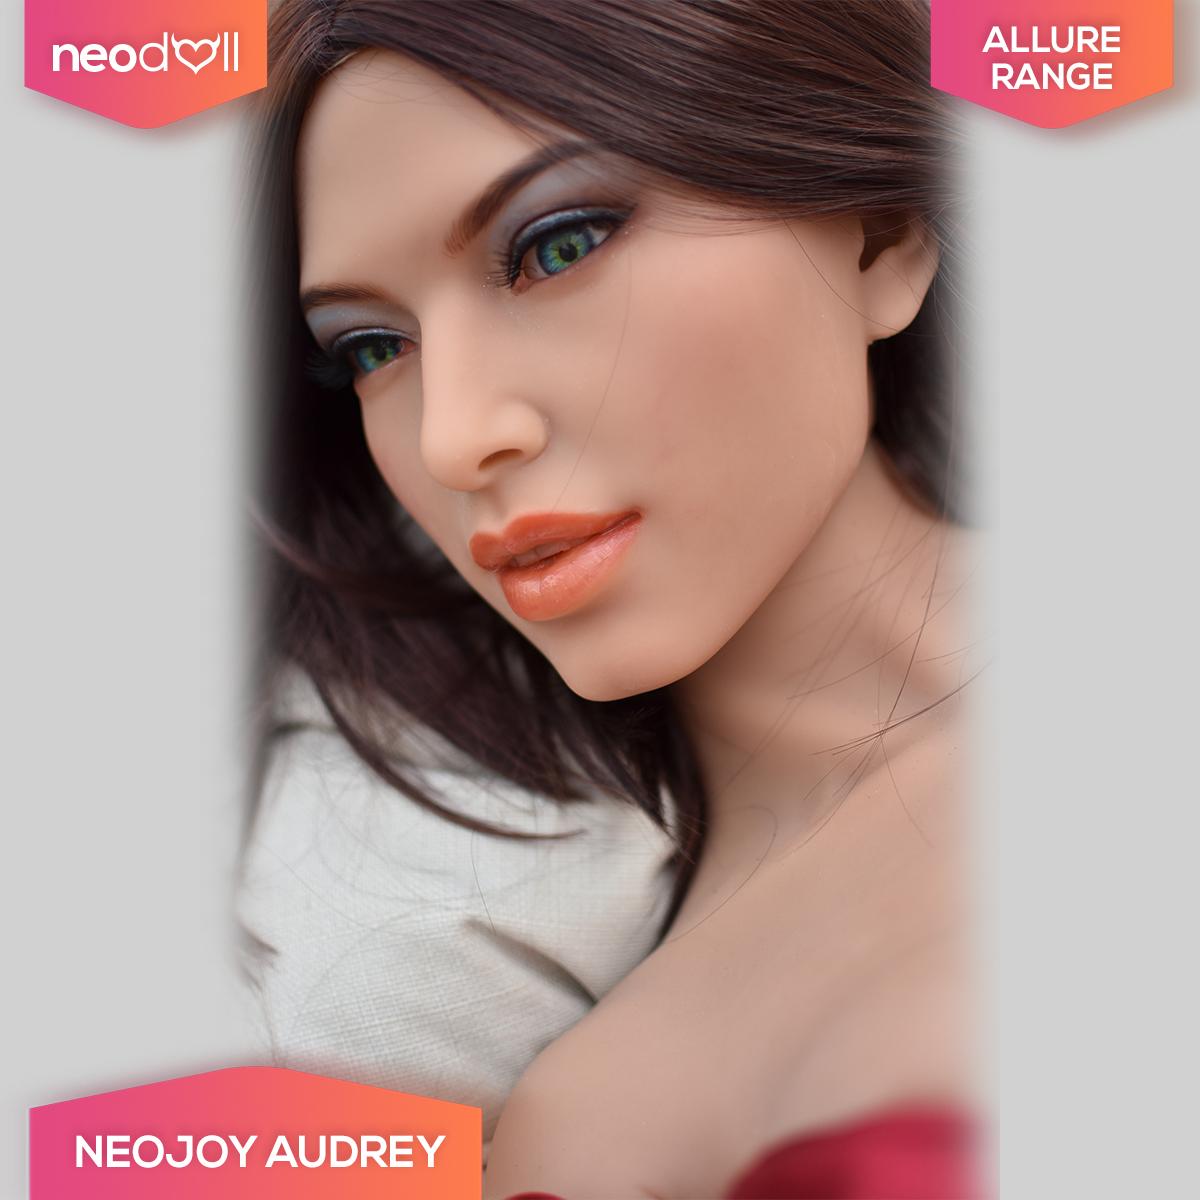 Neodoll Allure Audrey - Realistic Sex Doll - 165cm - Tan